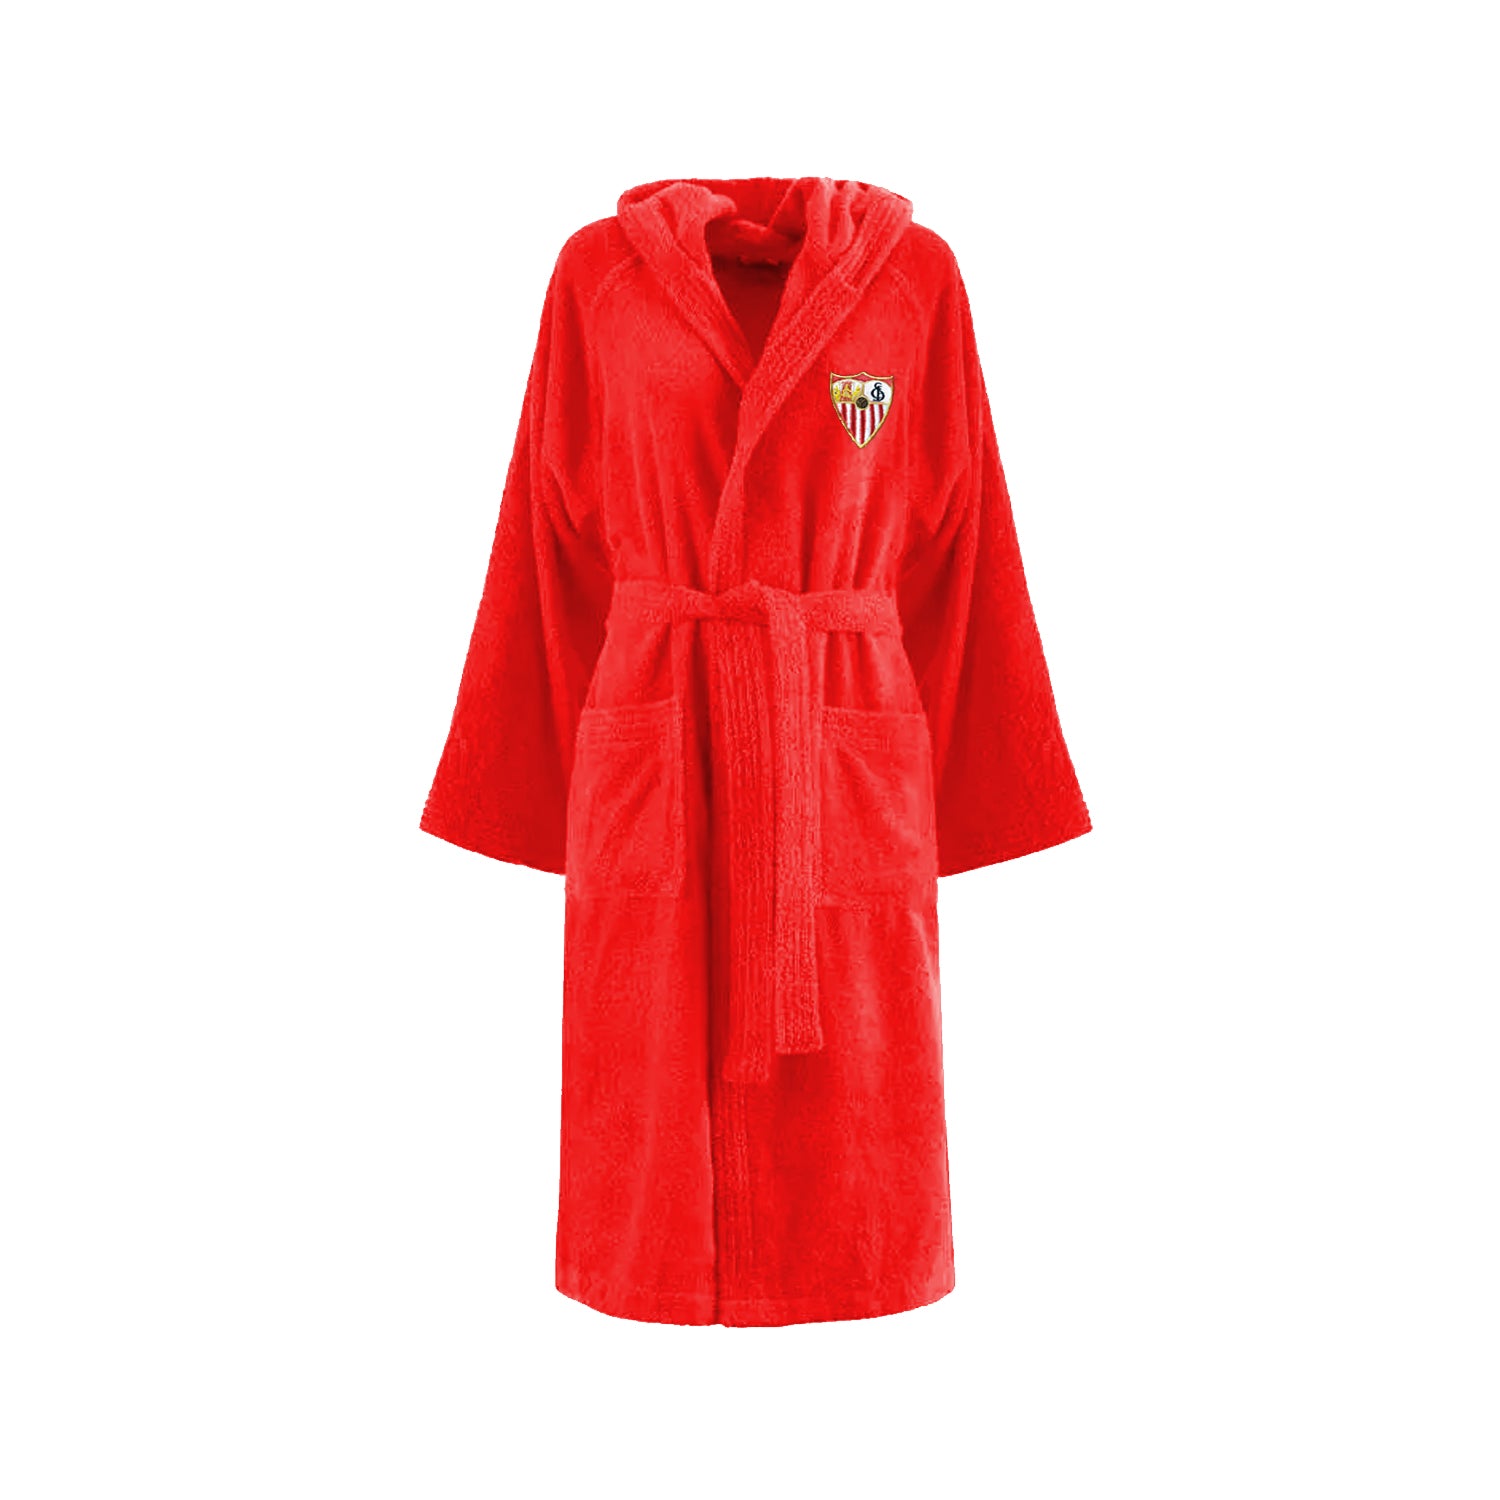 Kids red robe